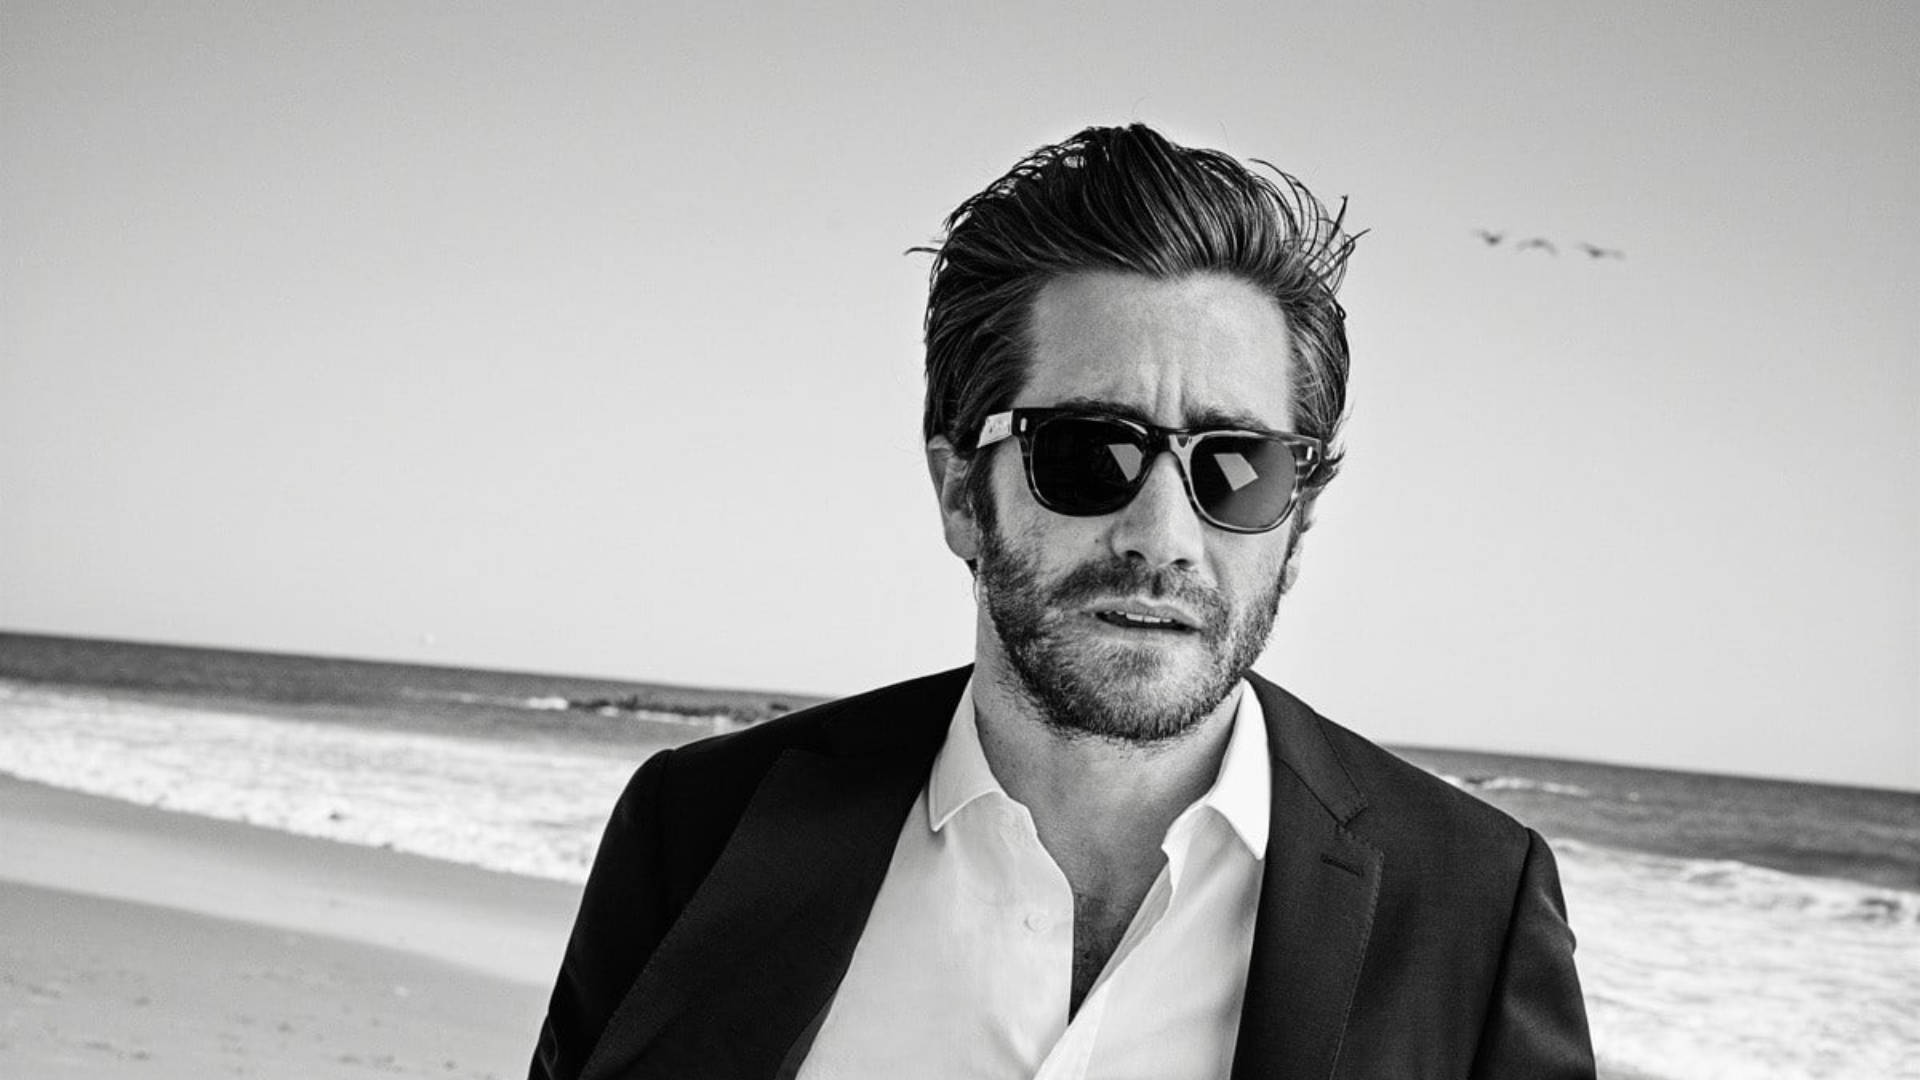 Jake Gyllenhaal With Sunglasses